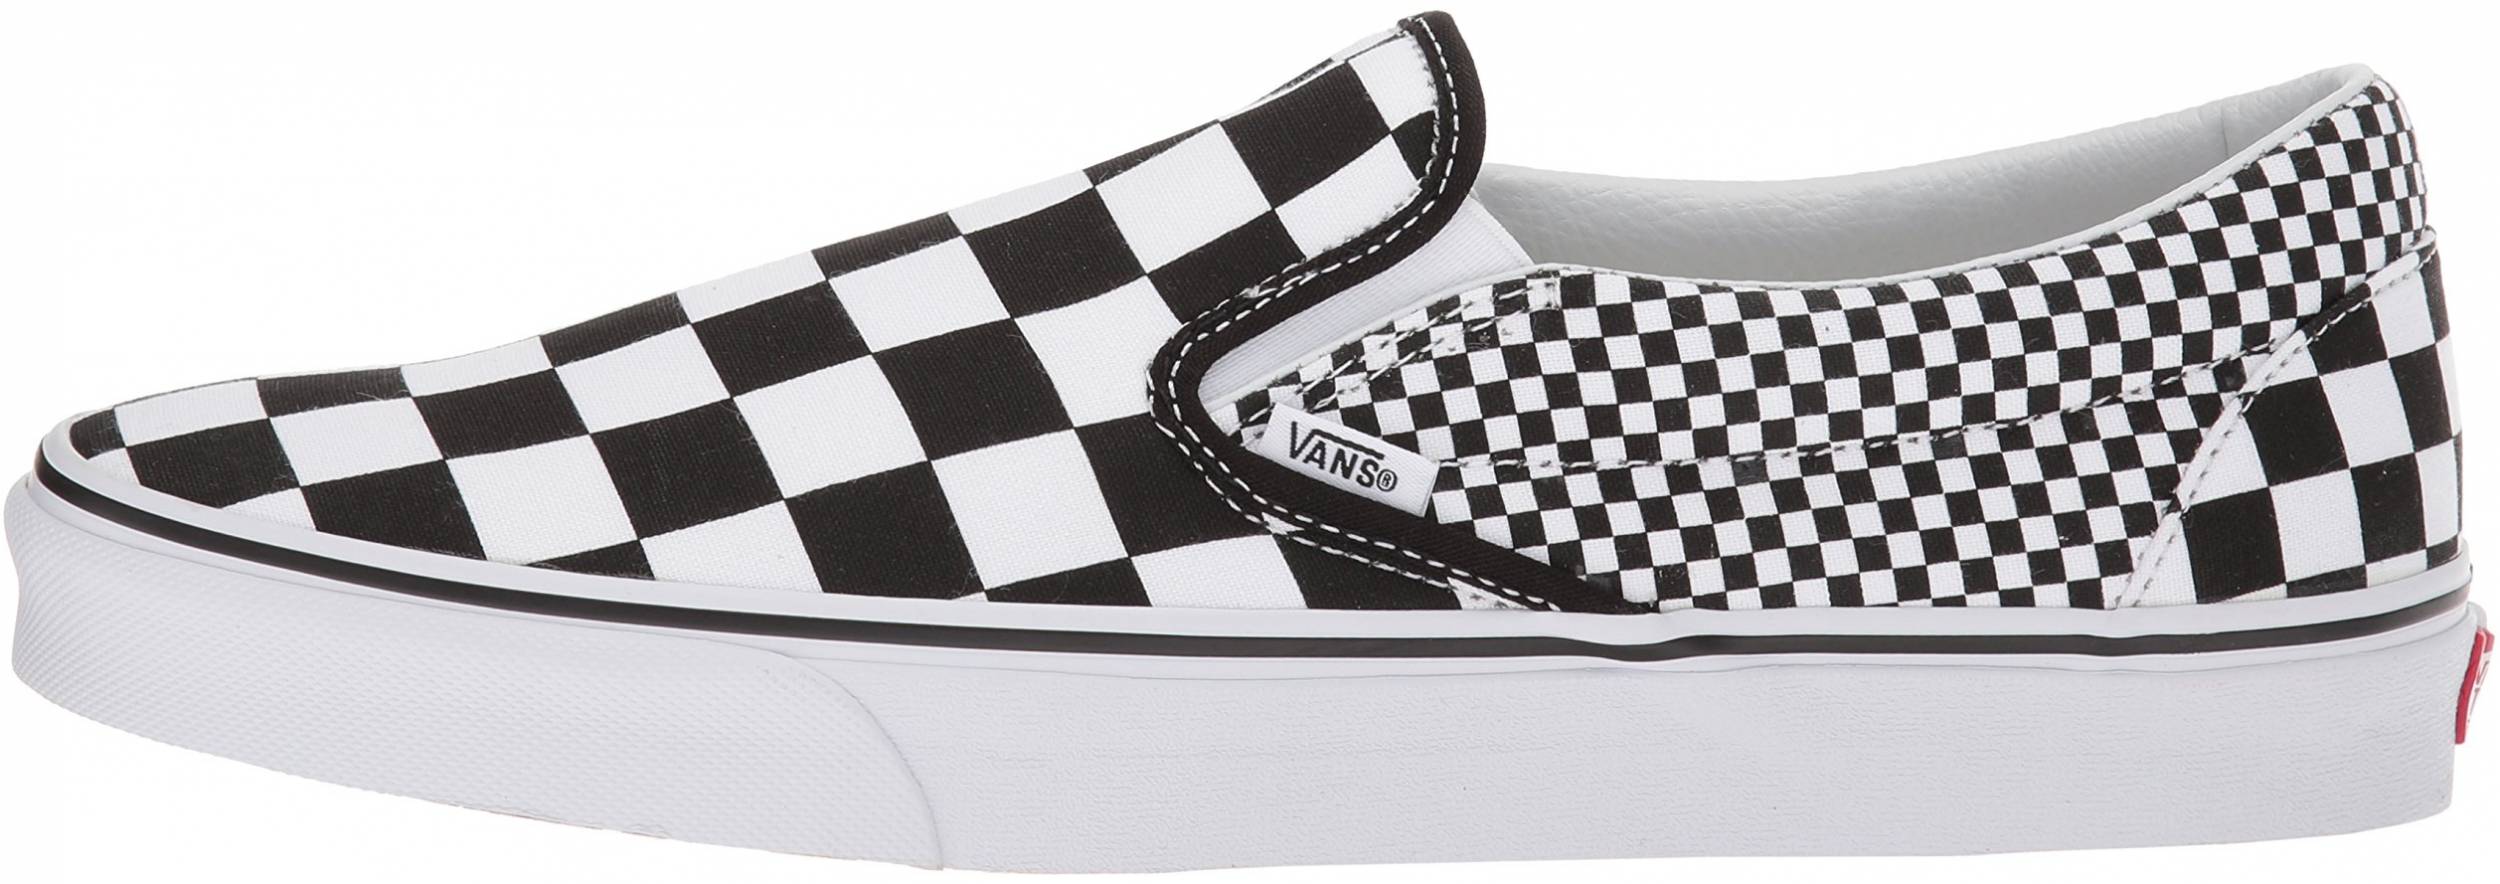 black and grey checkered slip on vans